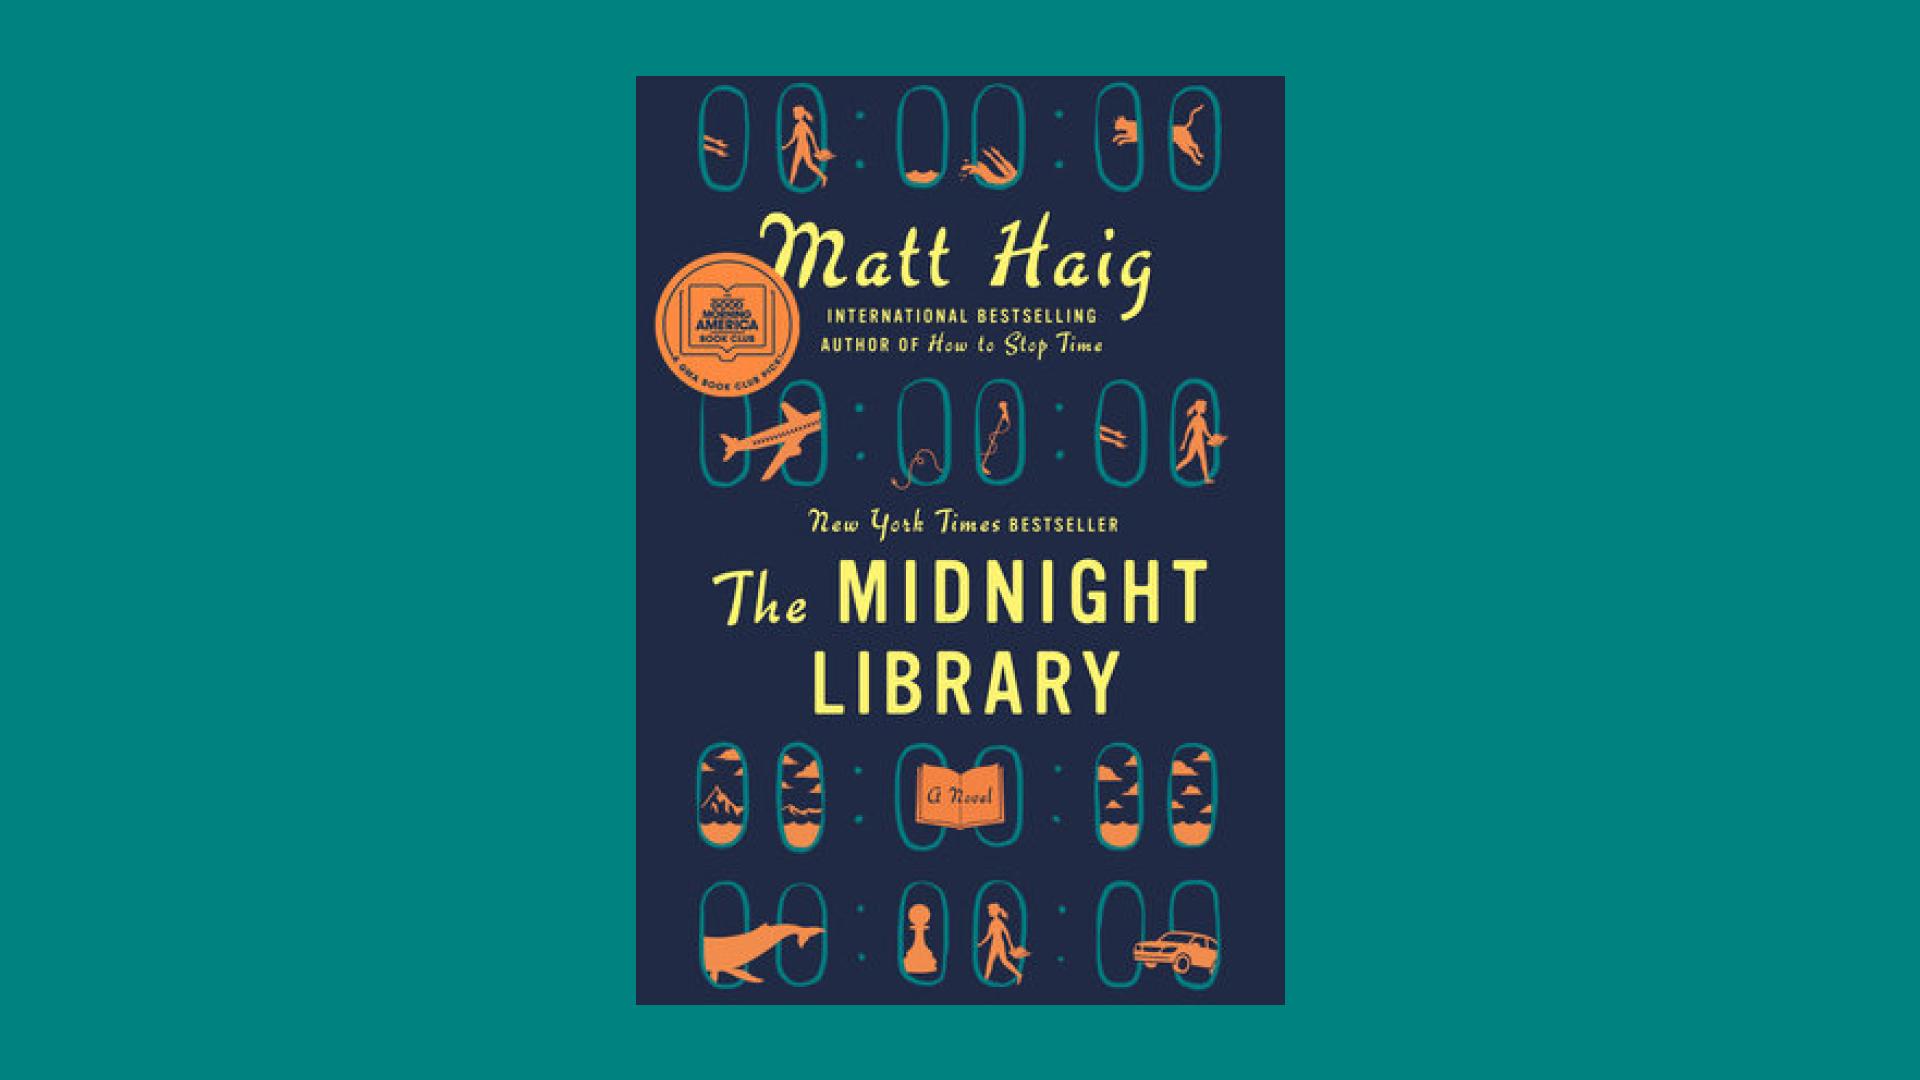 “The Midnight Library” by Matt Haig